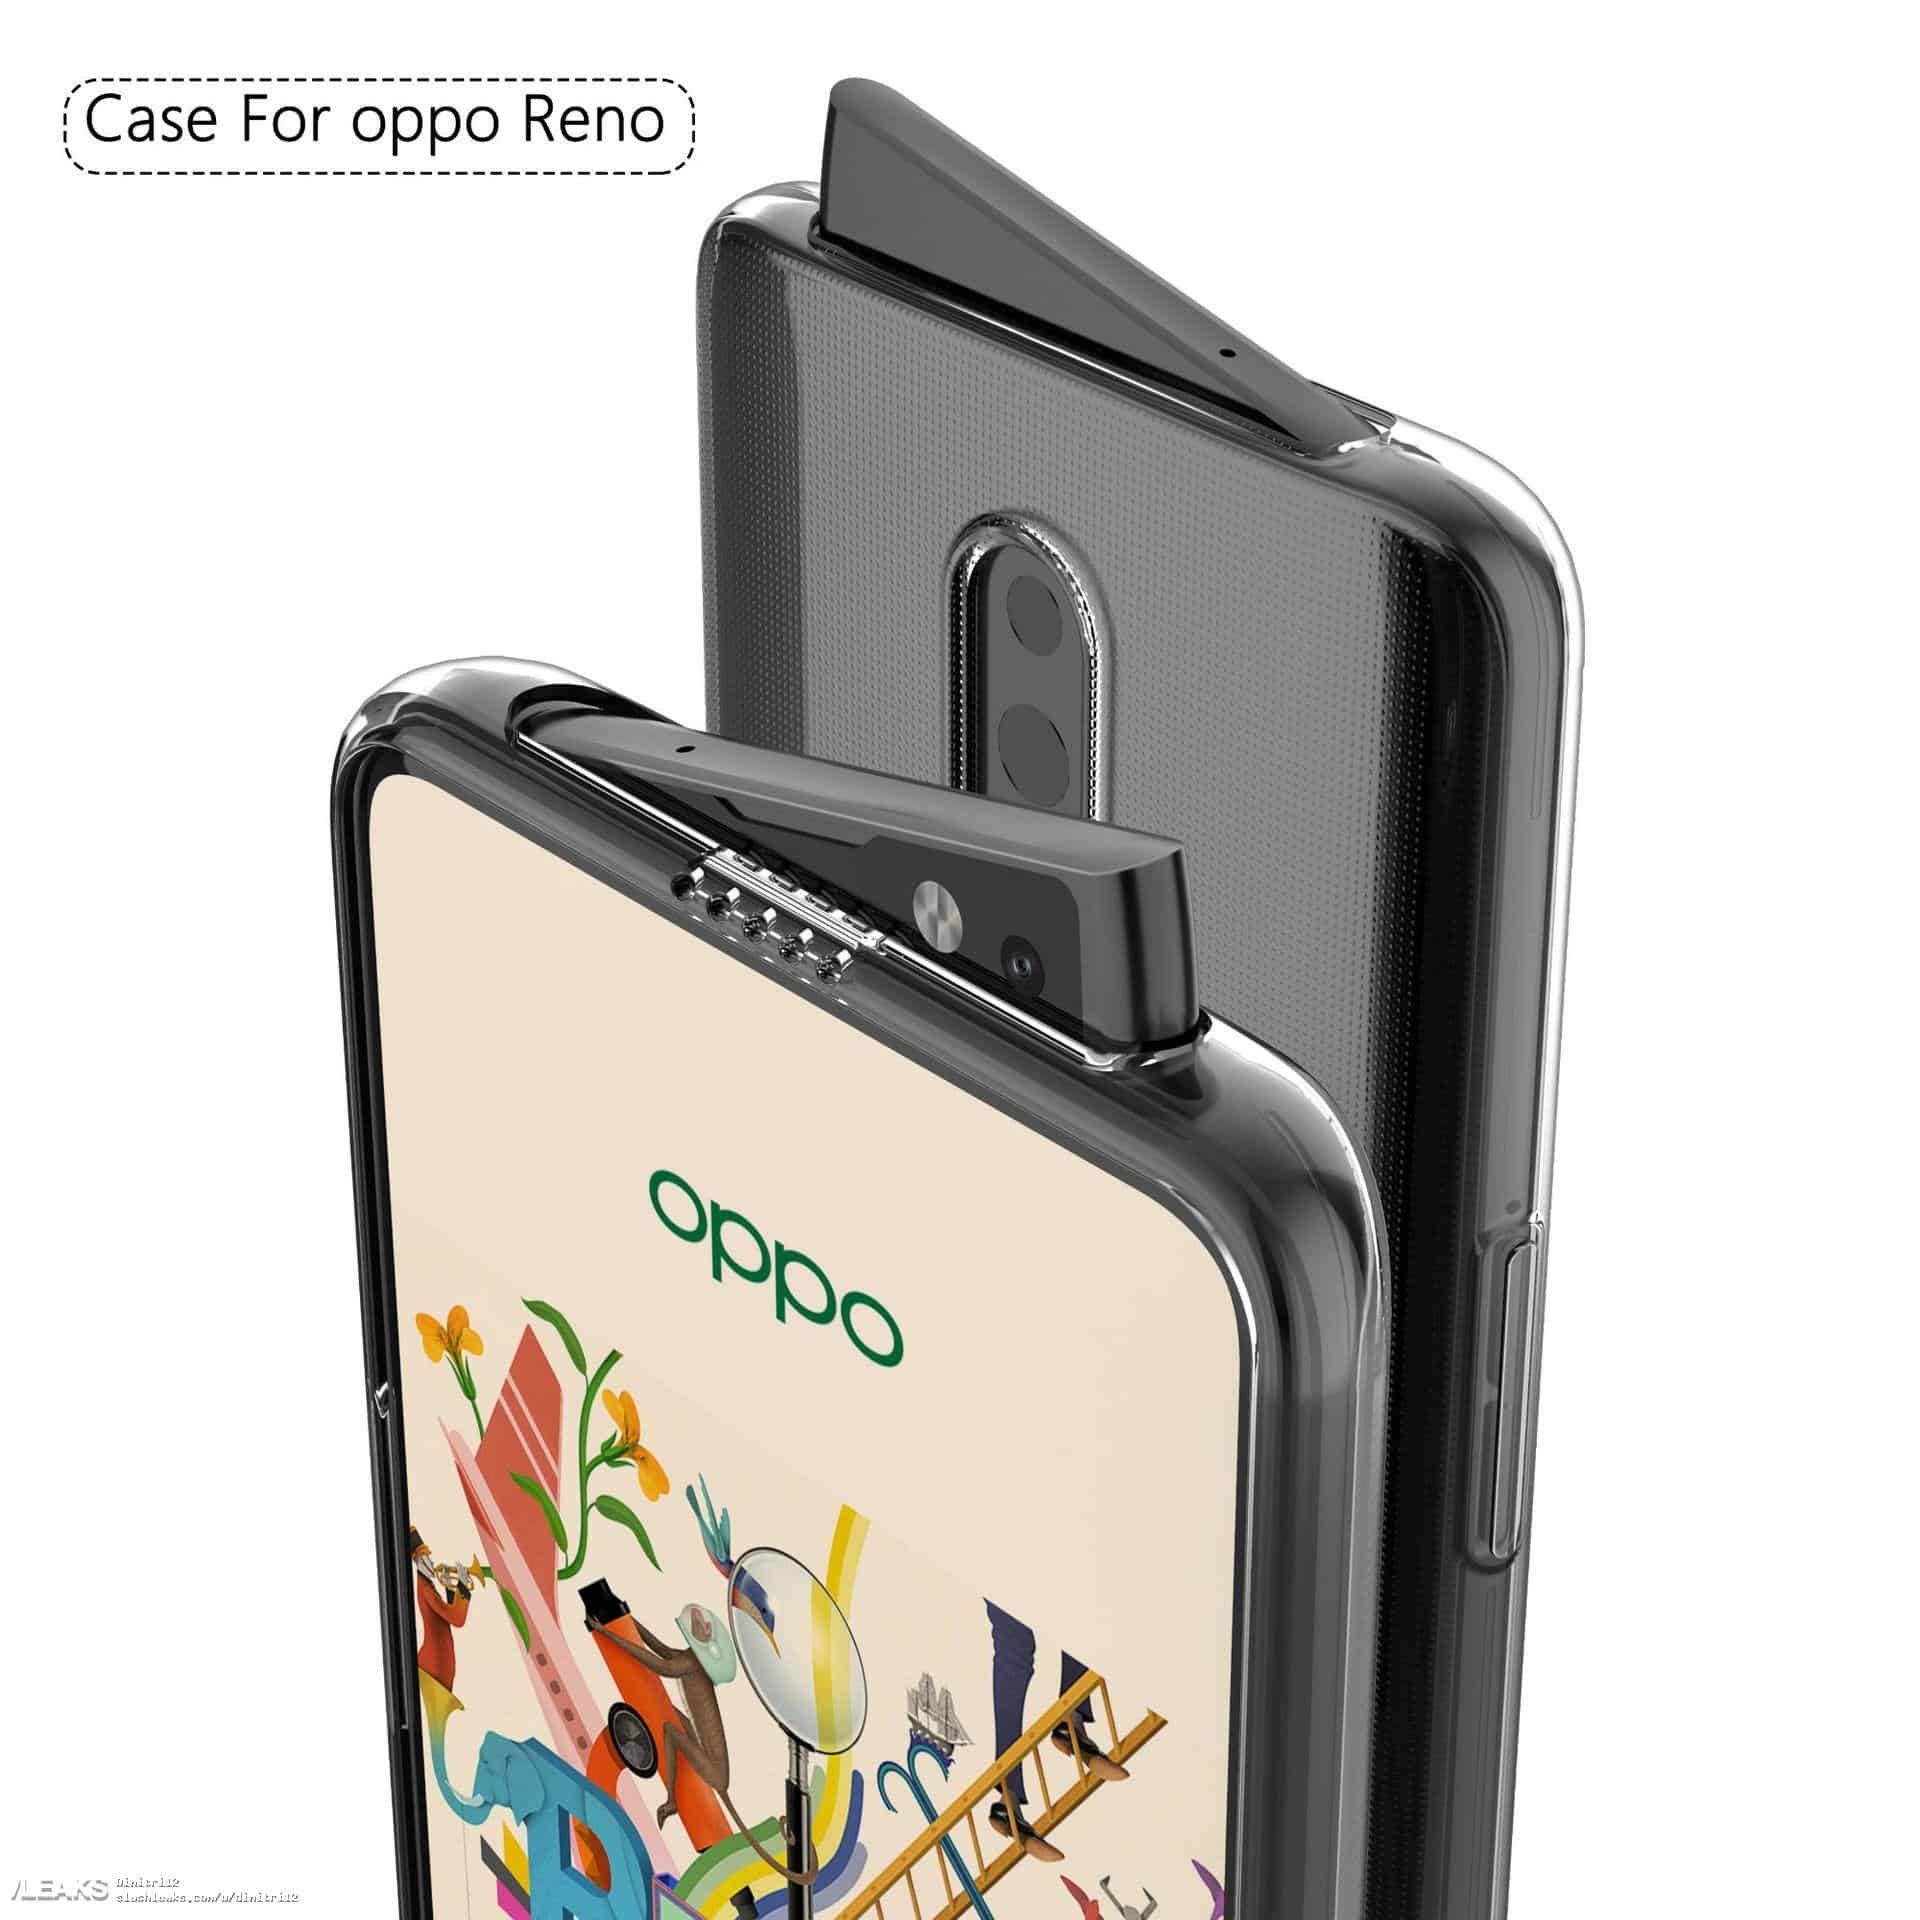 OPPO-Reno-case-renders-b